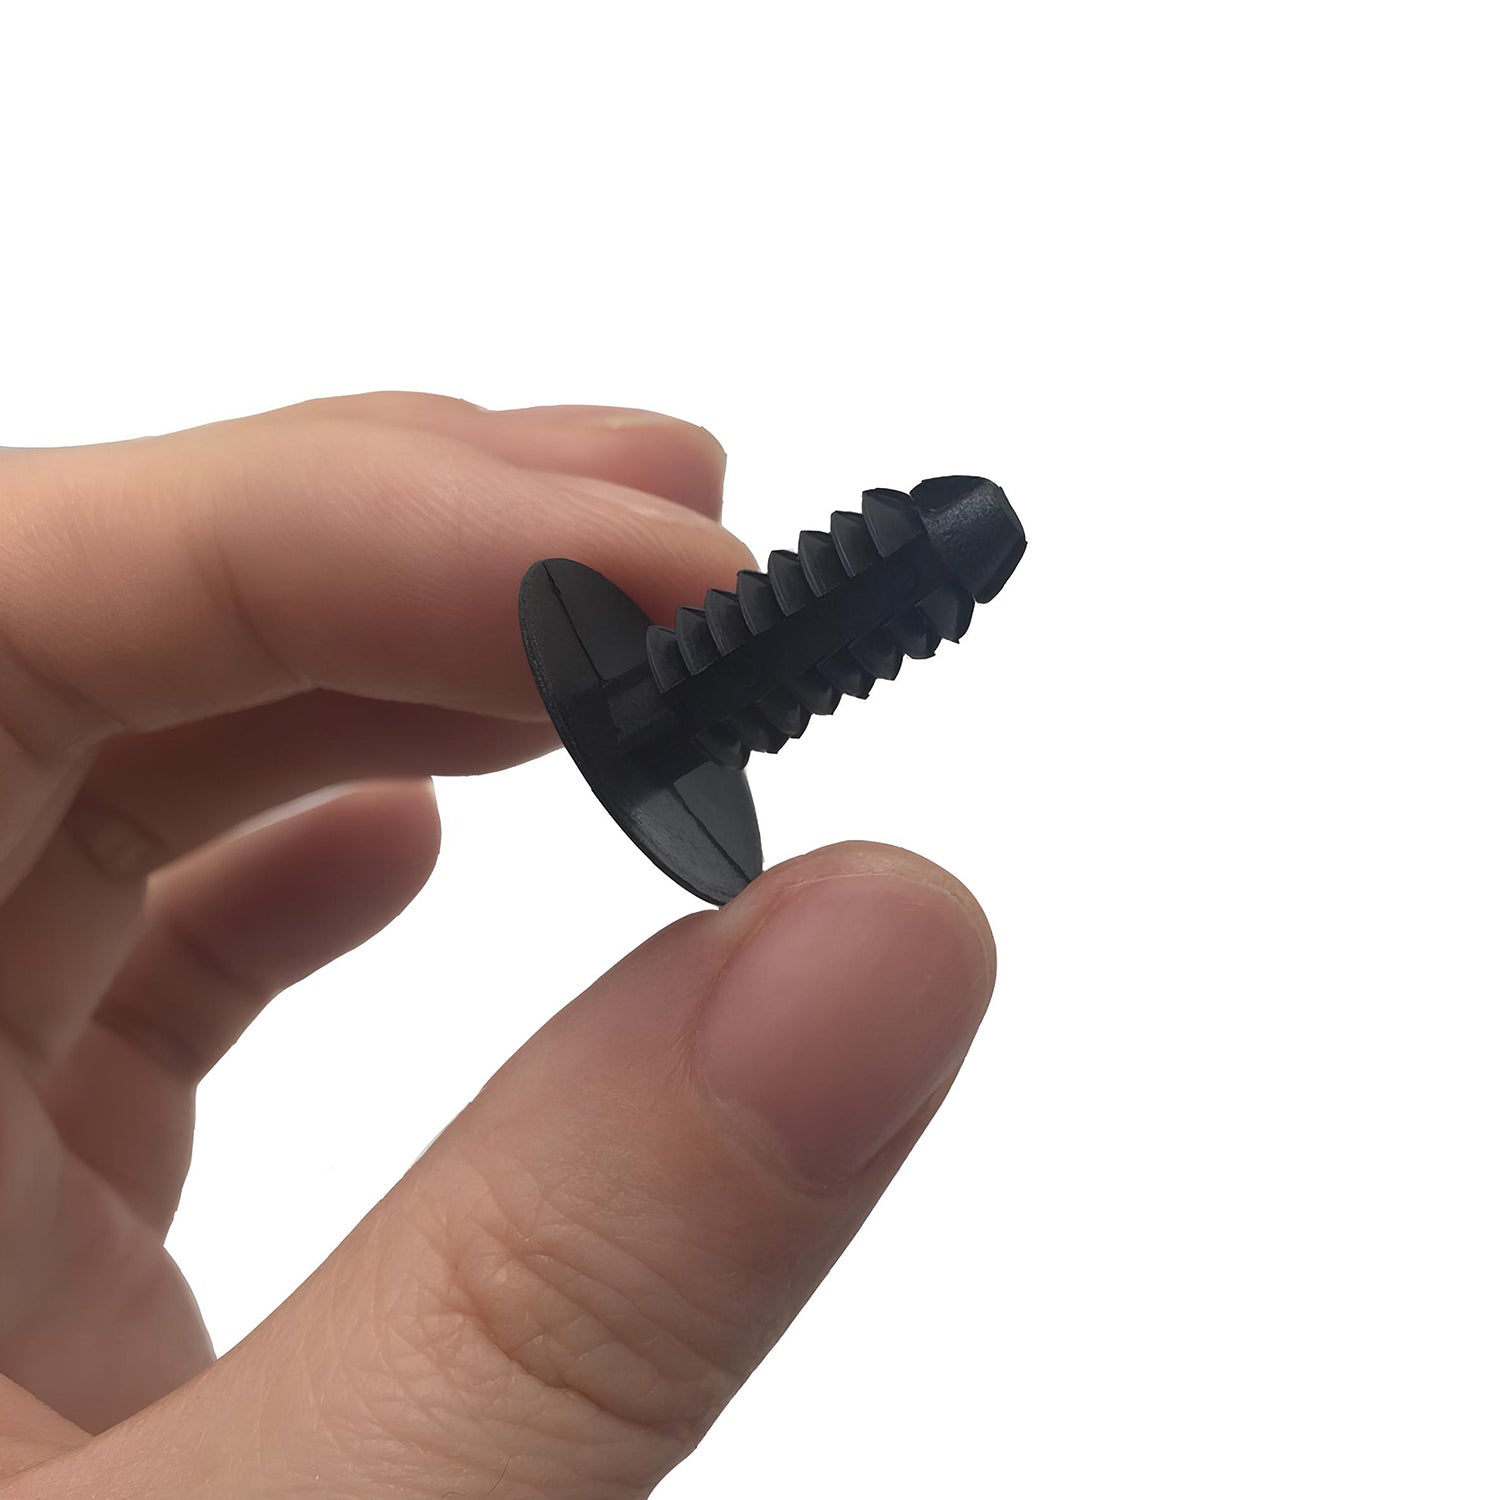 Detailed view of black fastener screw